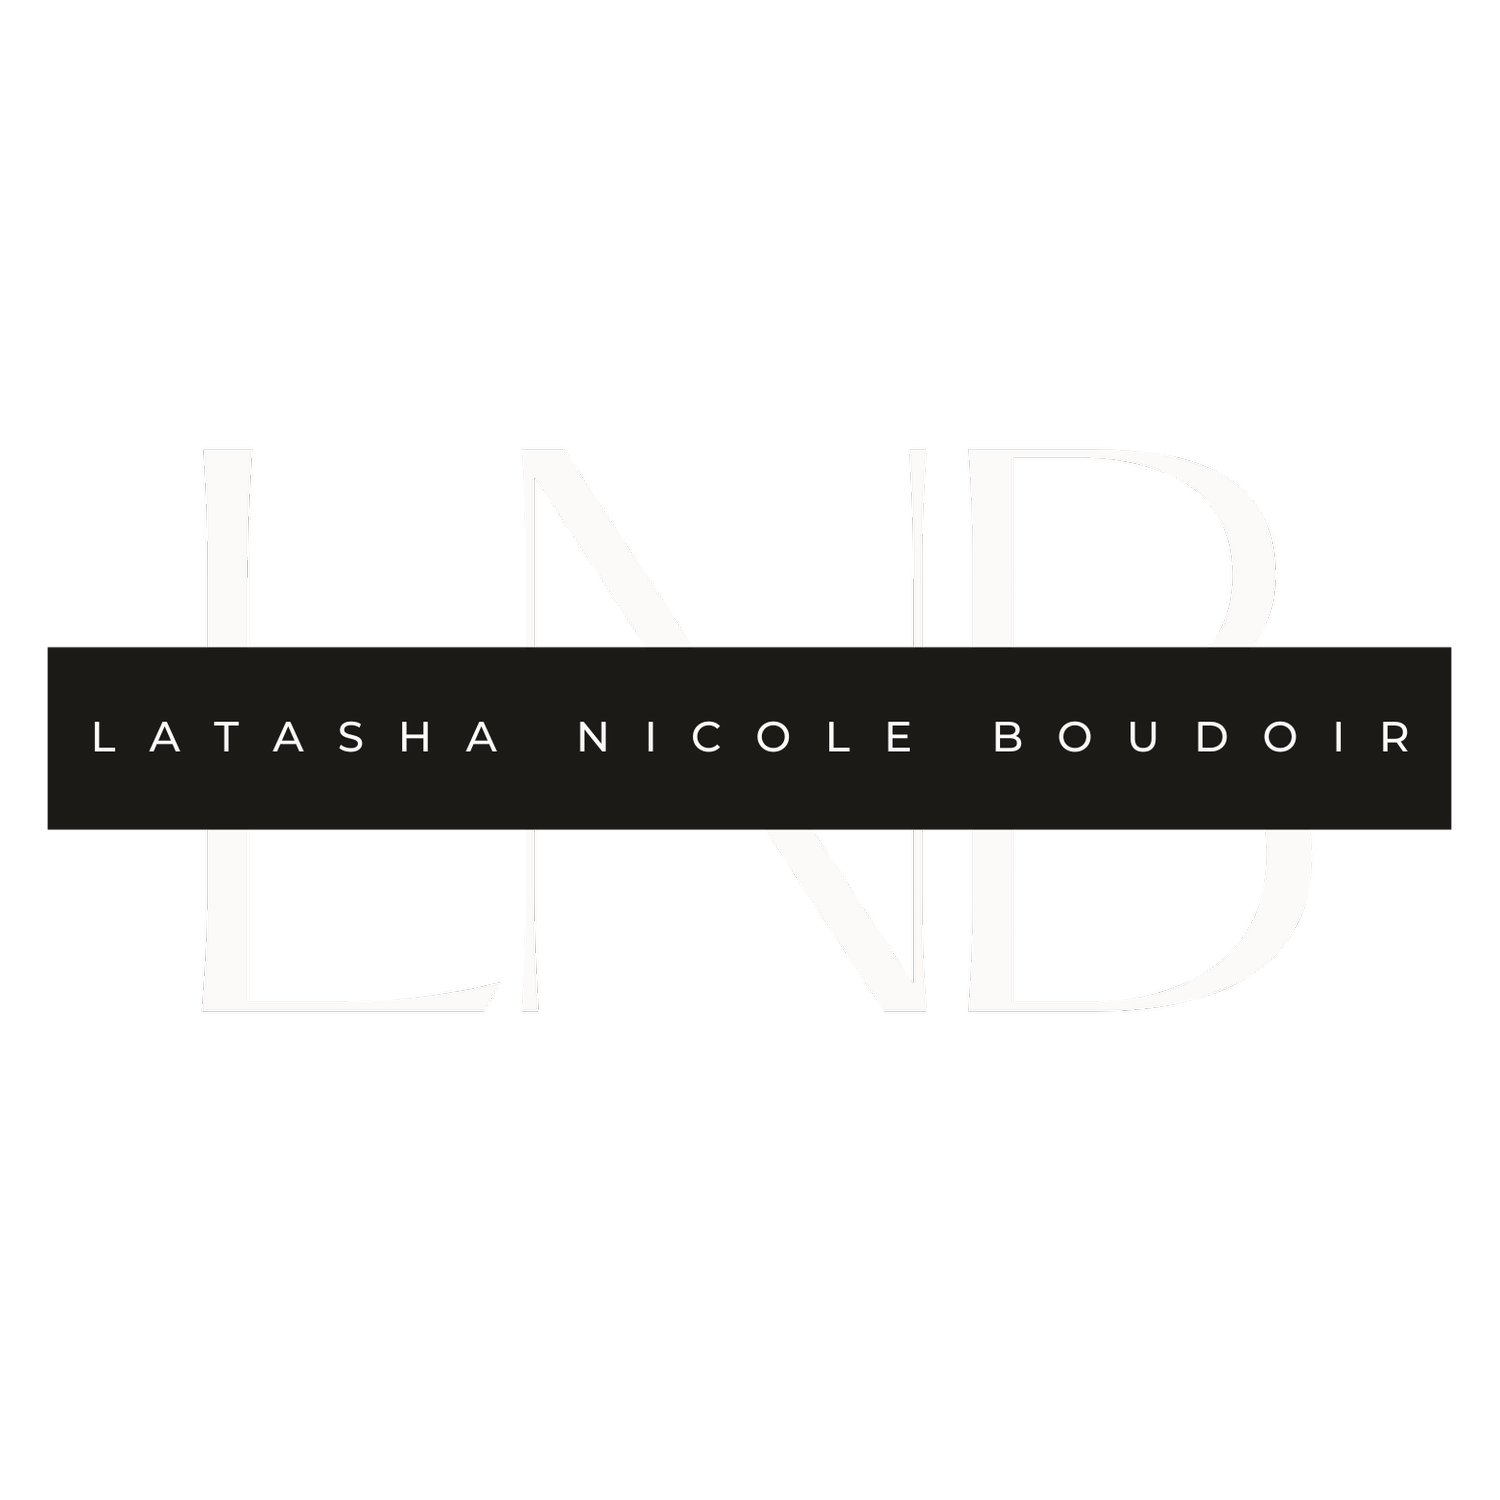 Latasha Nicole Boudoir - Las Vegas Boudoir Photography Studio